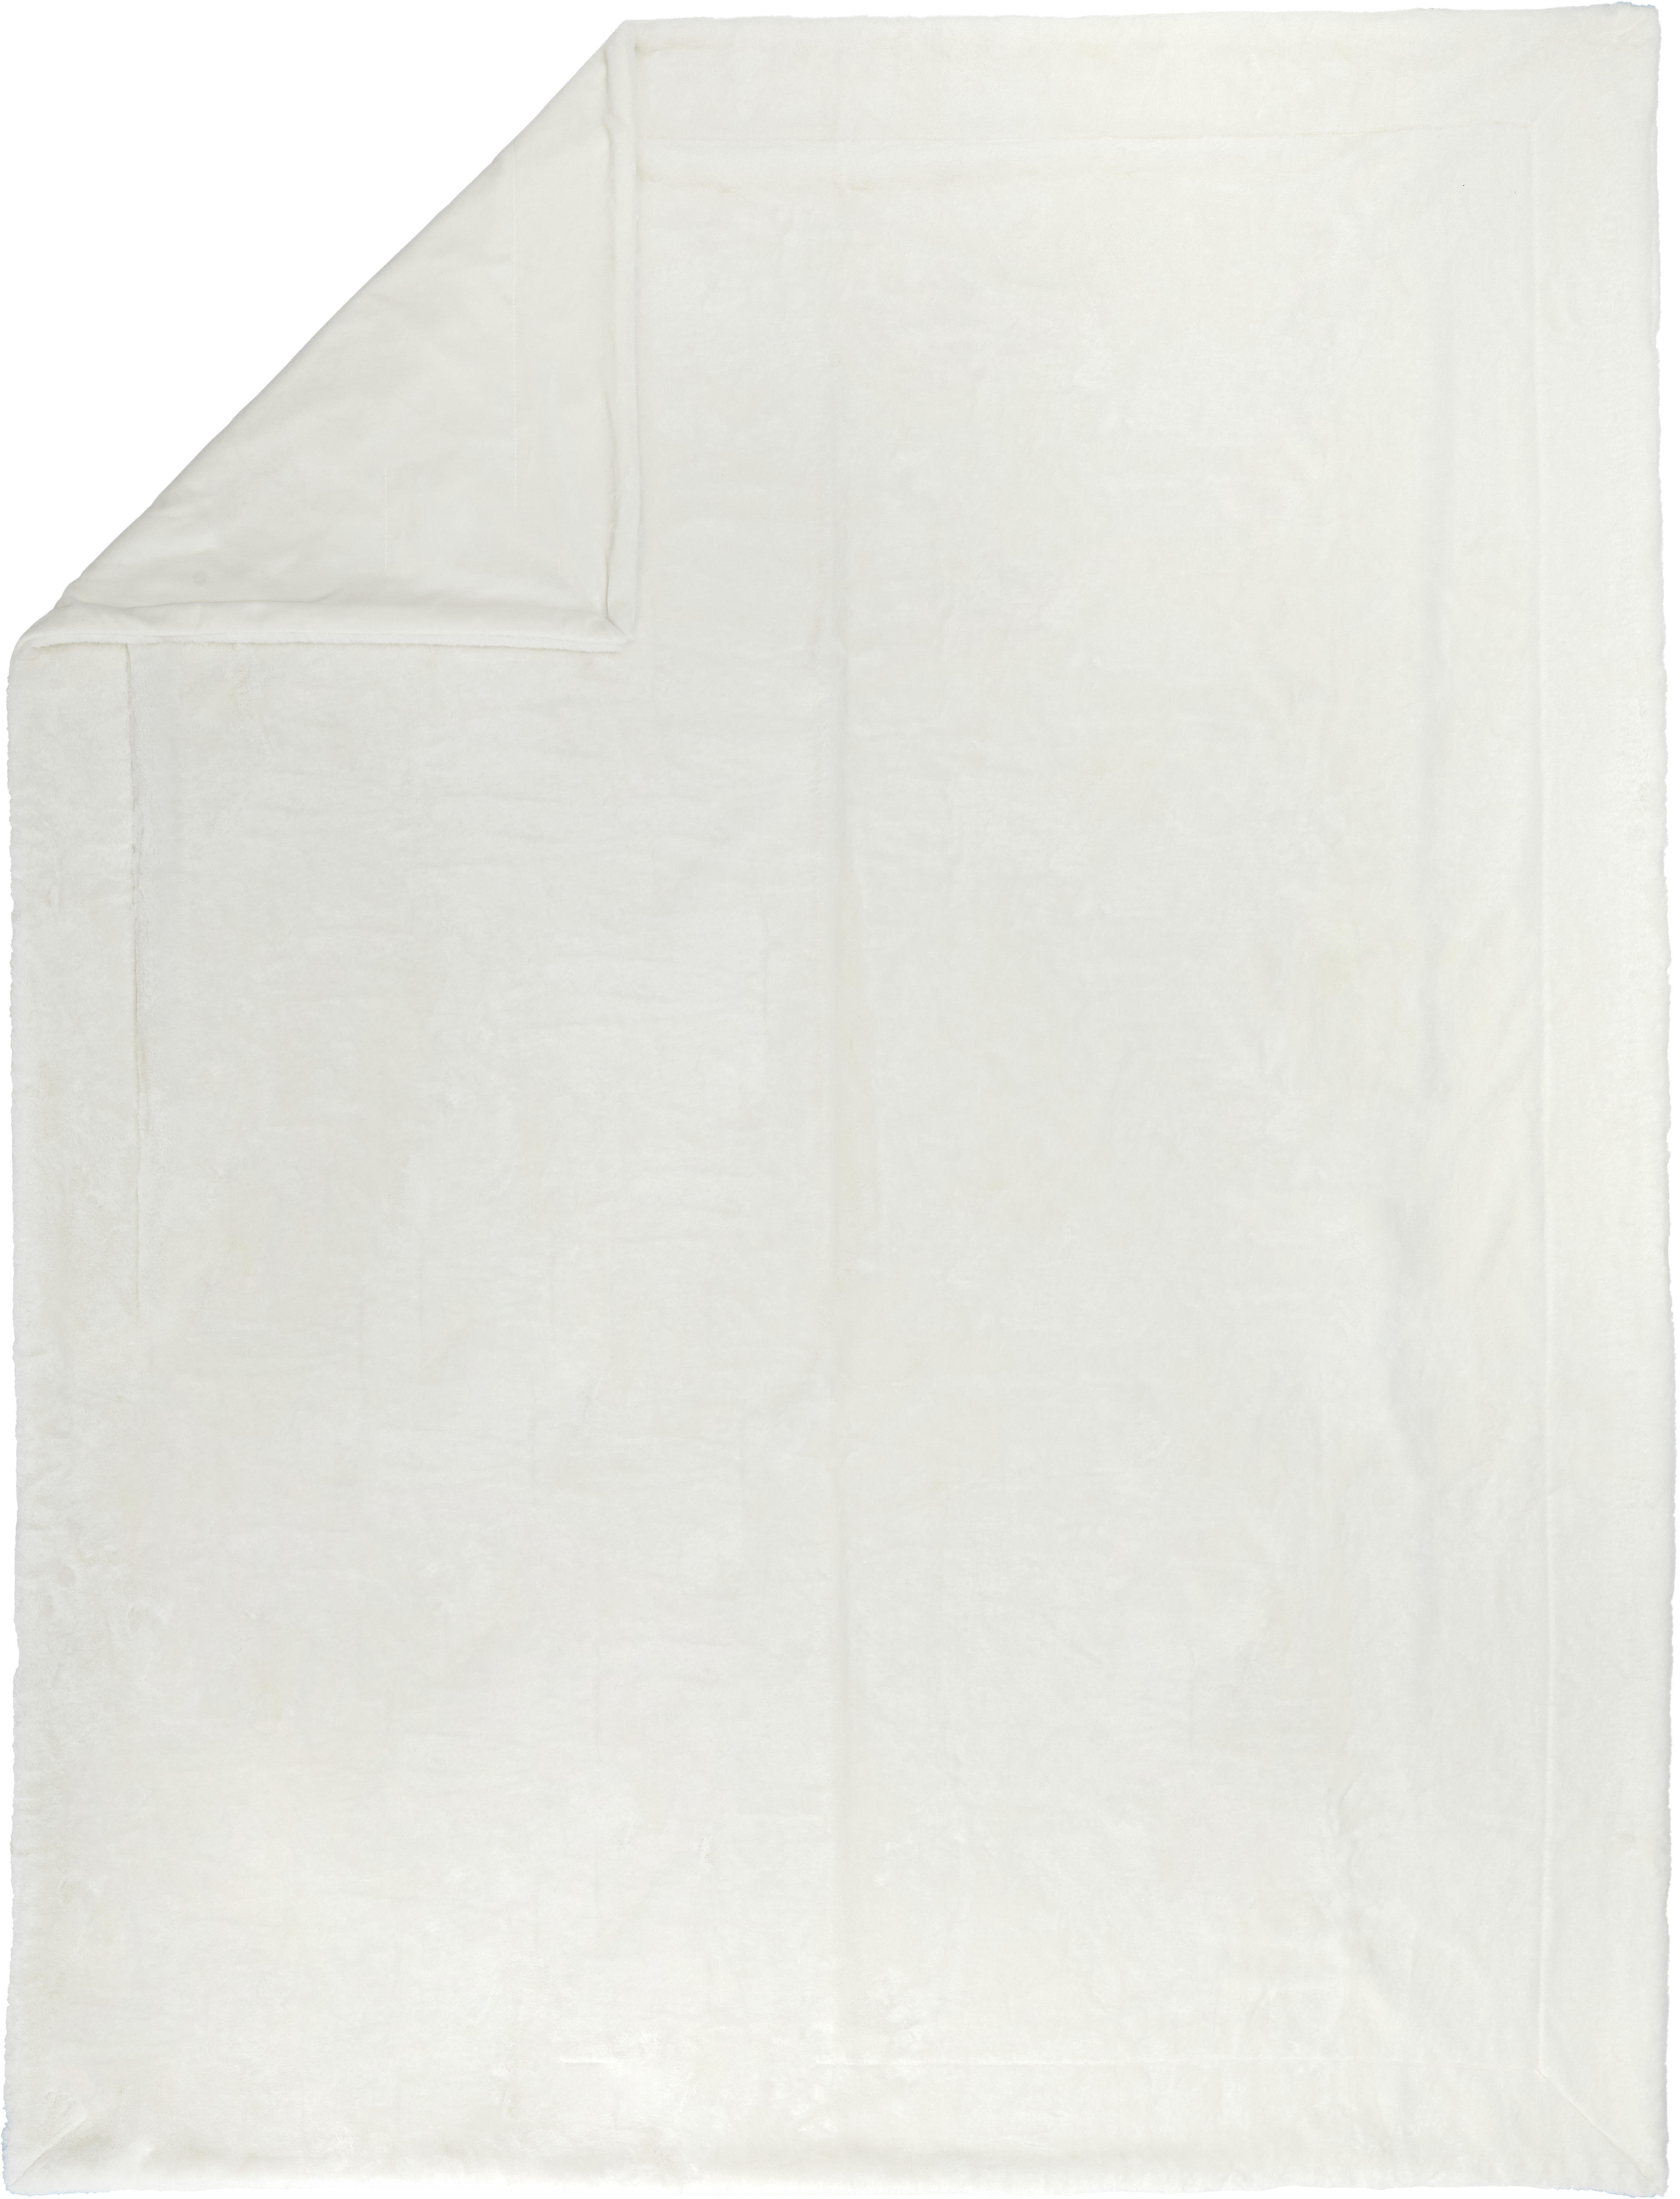 FELLDECKE Yukon 150/200 cm  - Weiß, Design, Textil (150/200cm) - Novel